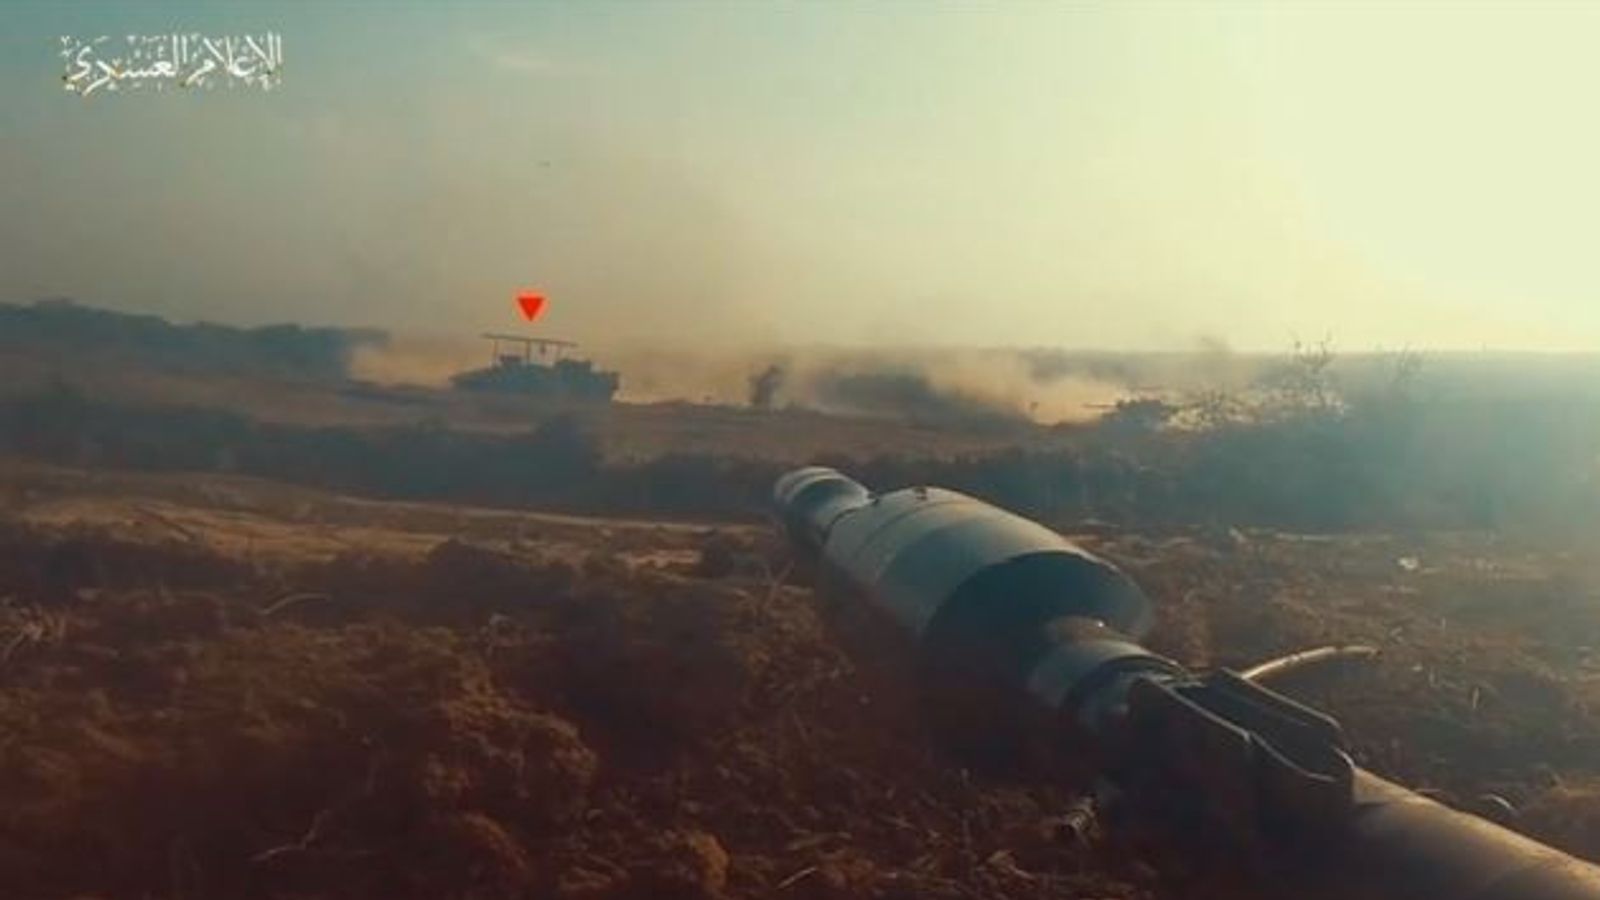 Israel-Gaza war: New Hamas video purportedly shows militants targeting tank - as IDF says its troops 'at gates of Gaza City'